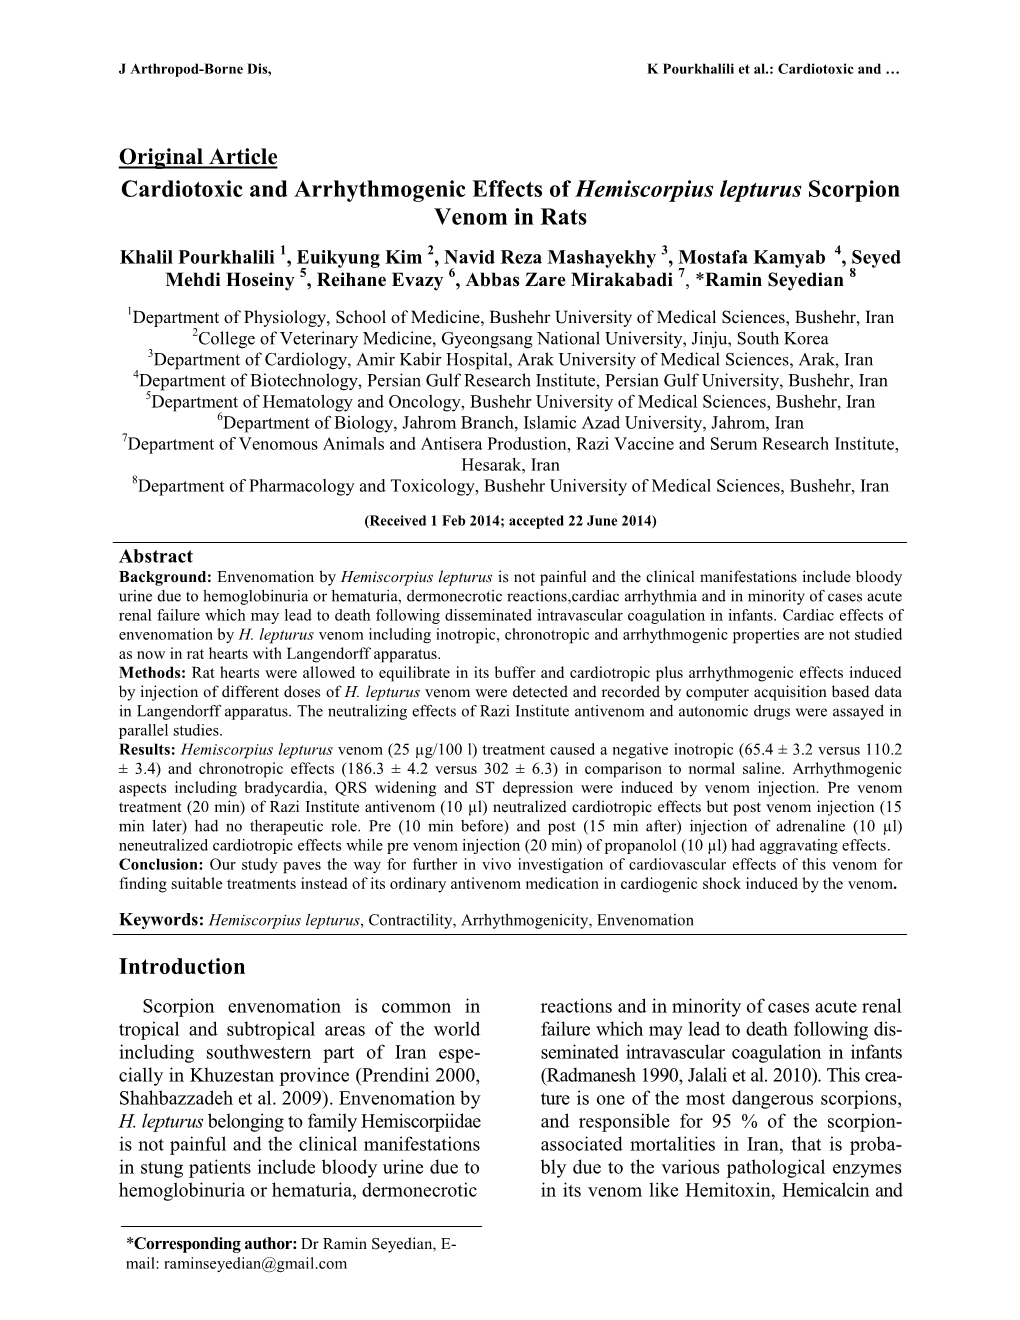 Original Article Cardiotoxic and Arrhythmogenic Effects Of